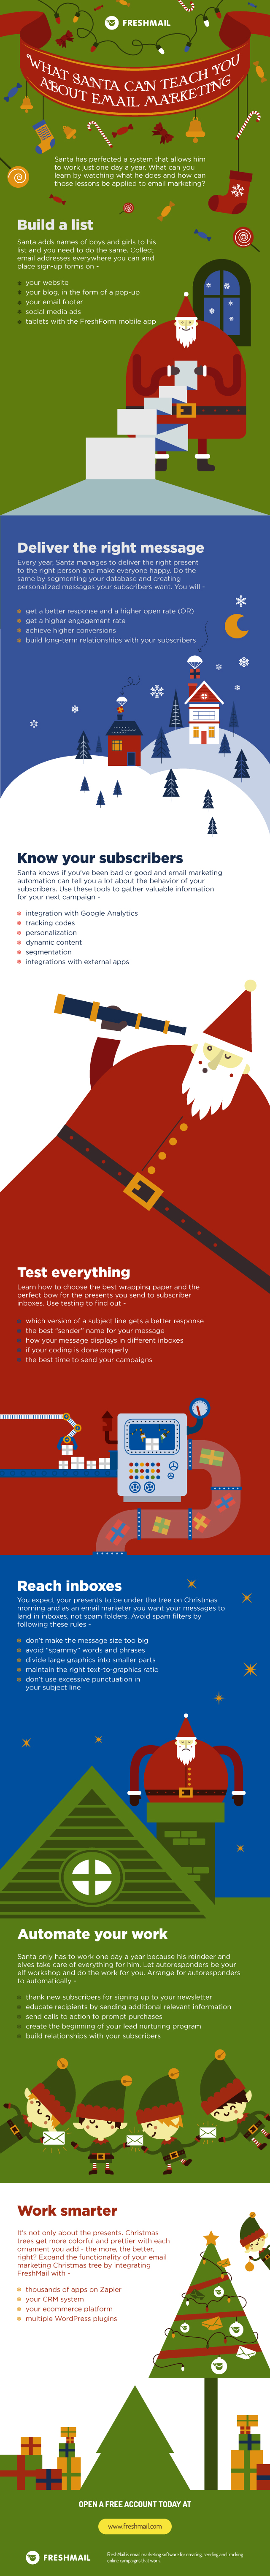 infographic_santa_email_marketing